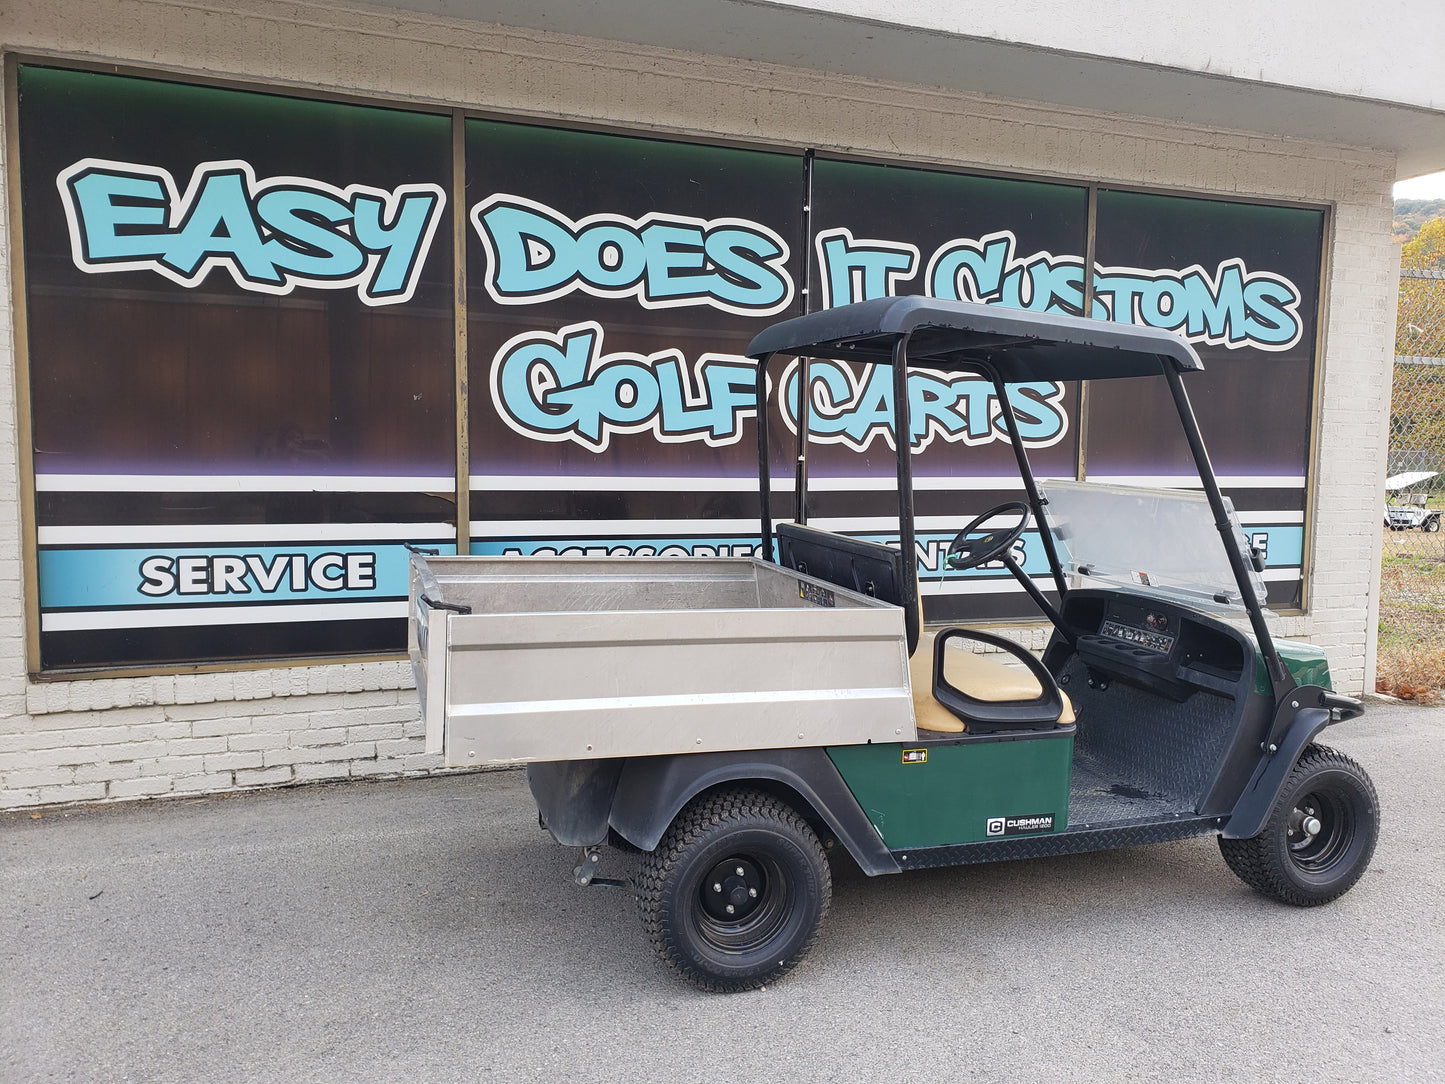 2015 Cushman Hauler 1200 - Gas Golf Cart *SOLD*